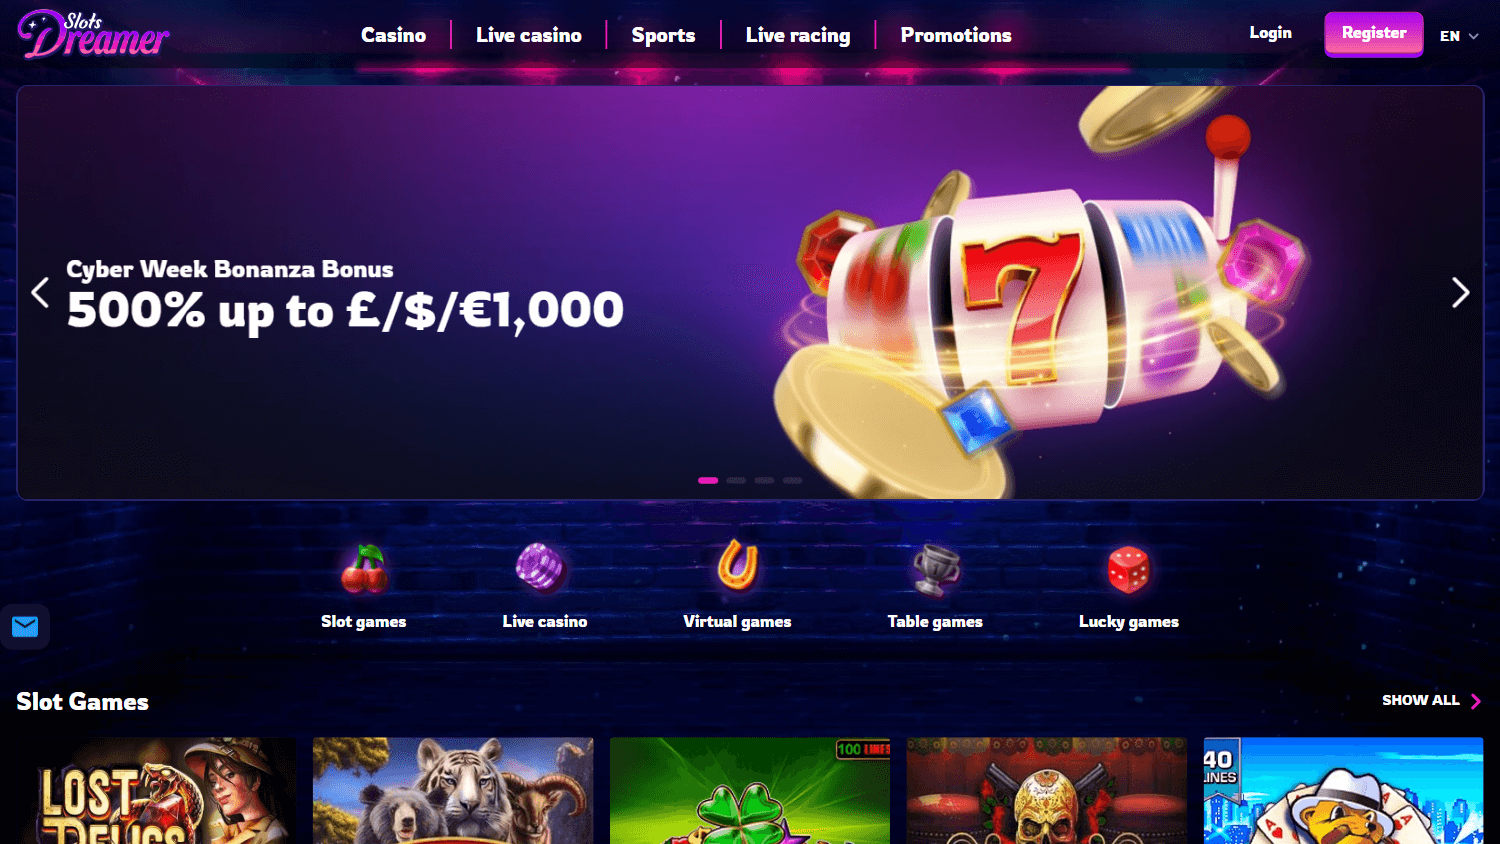 slots_dreamer_casino_homepage_desktop